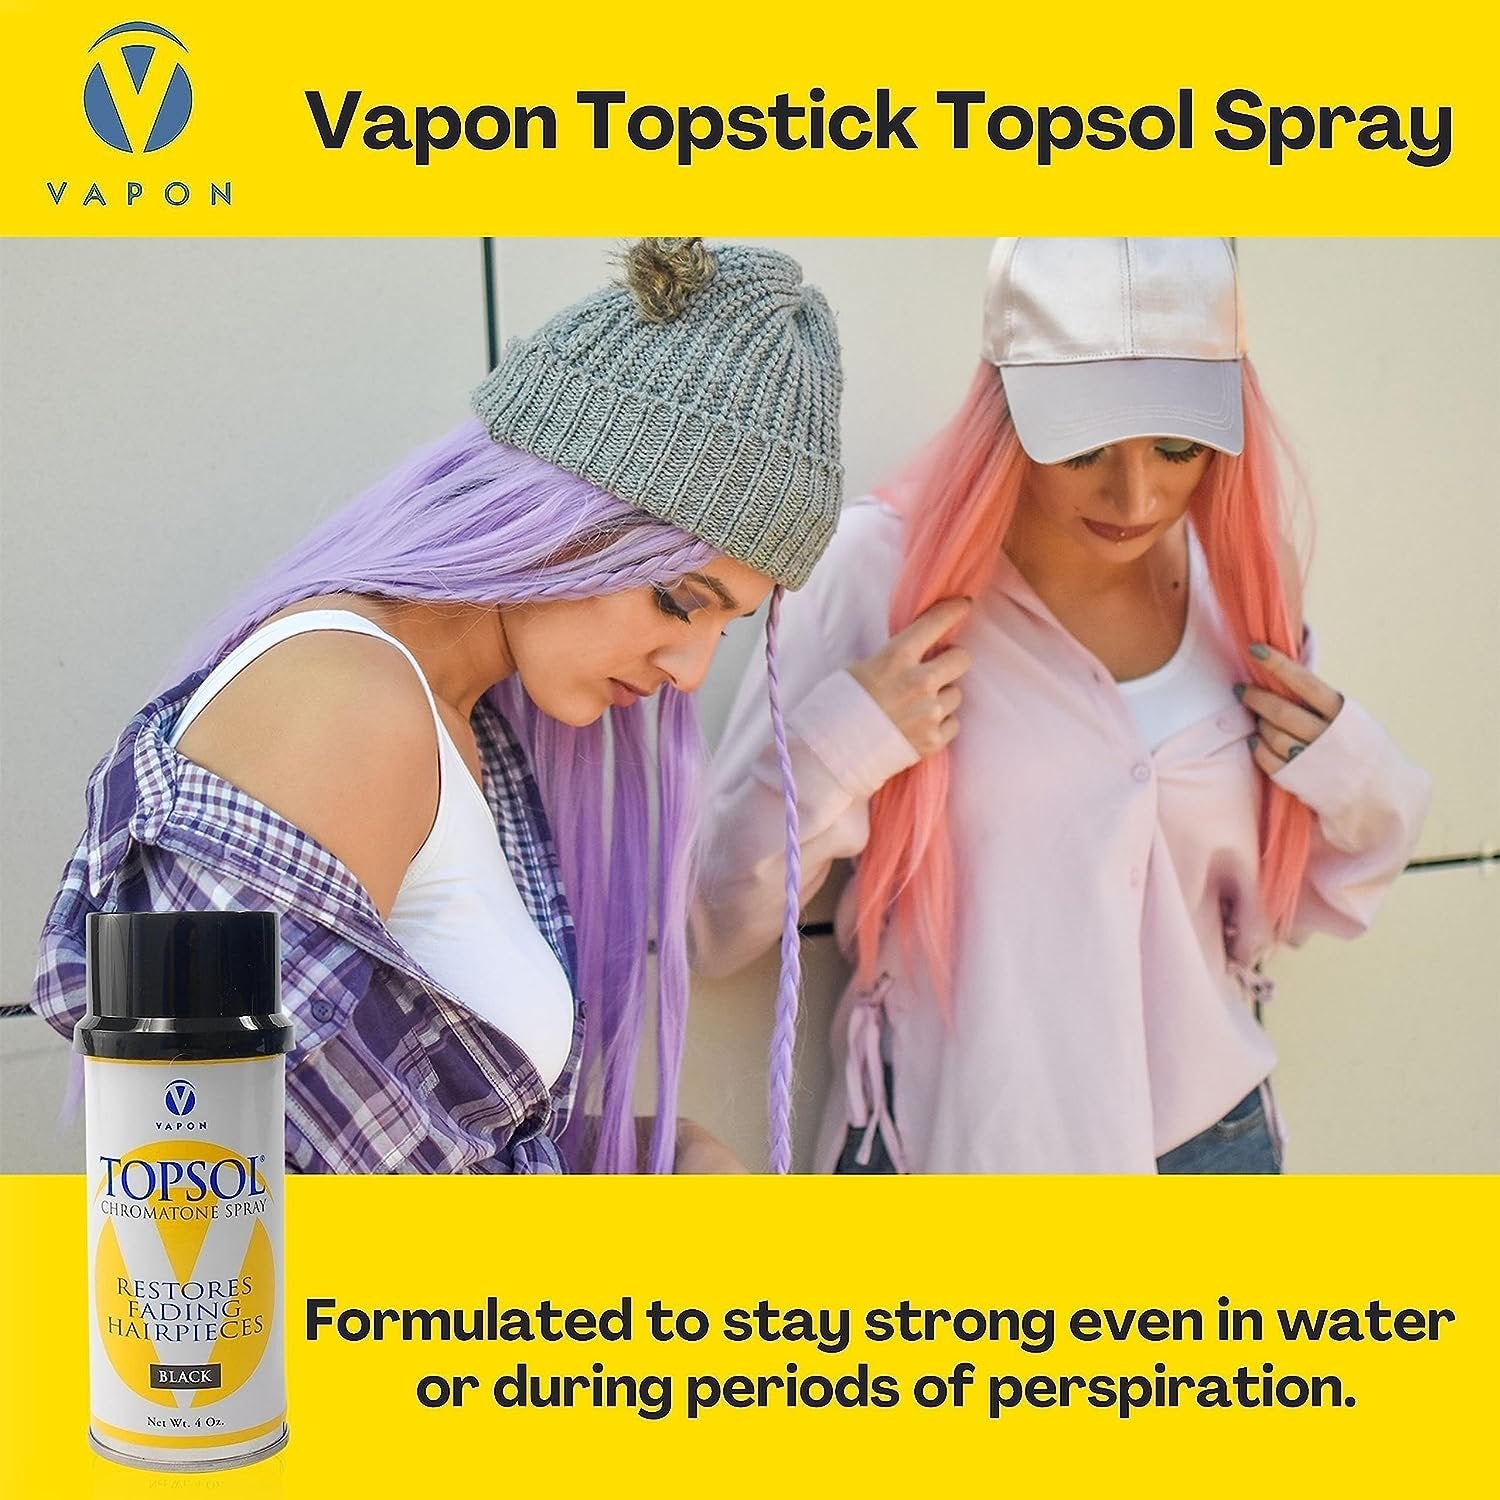 Vapon Topsol Chromatone Spray 4 Oz. with Bonus Worldwidenutrition Multi-Purpose Key Chain